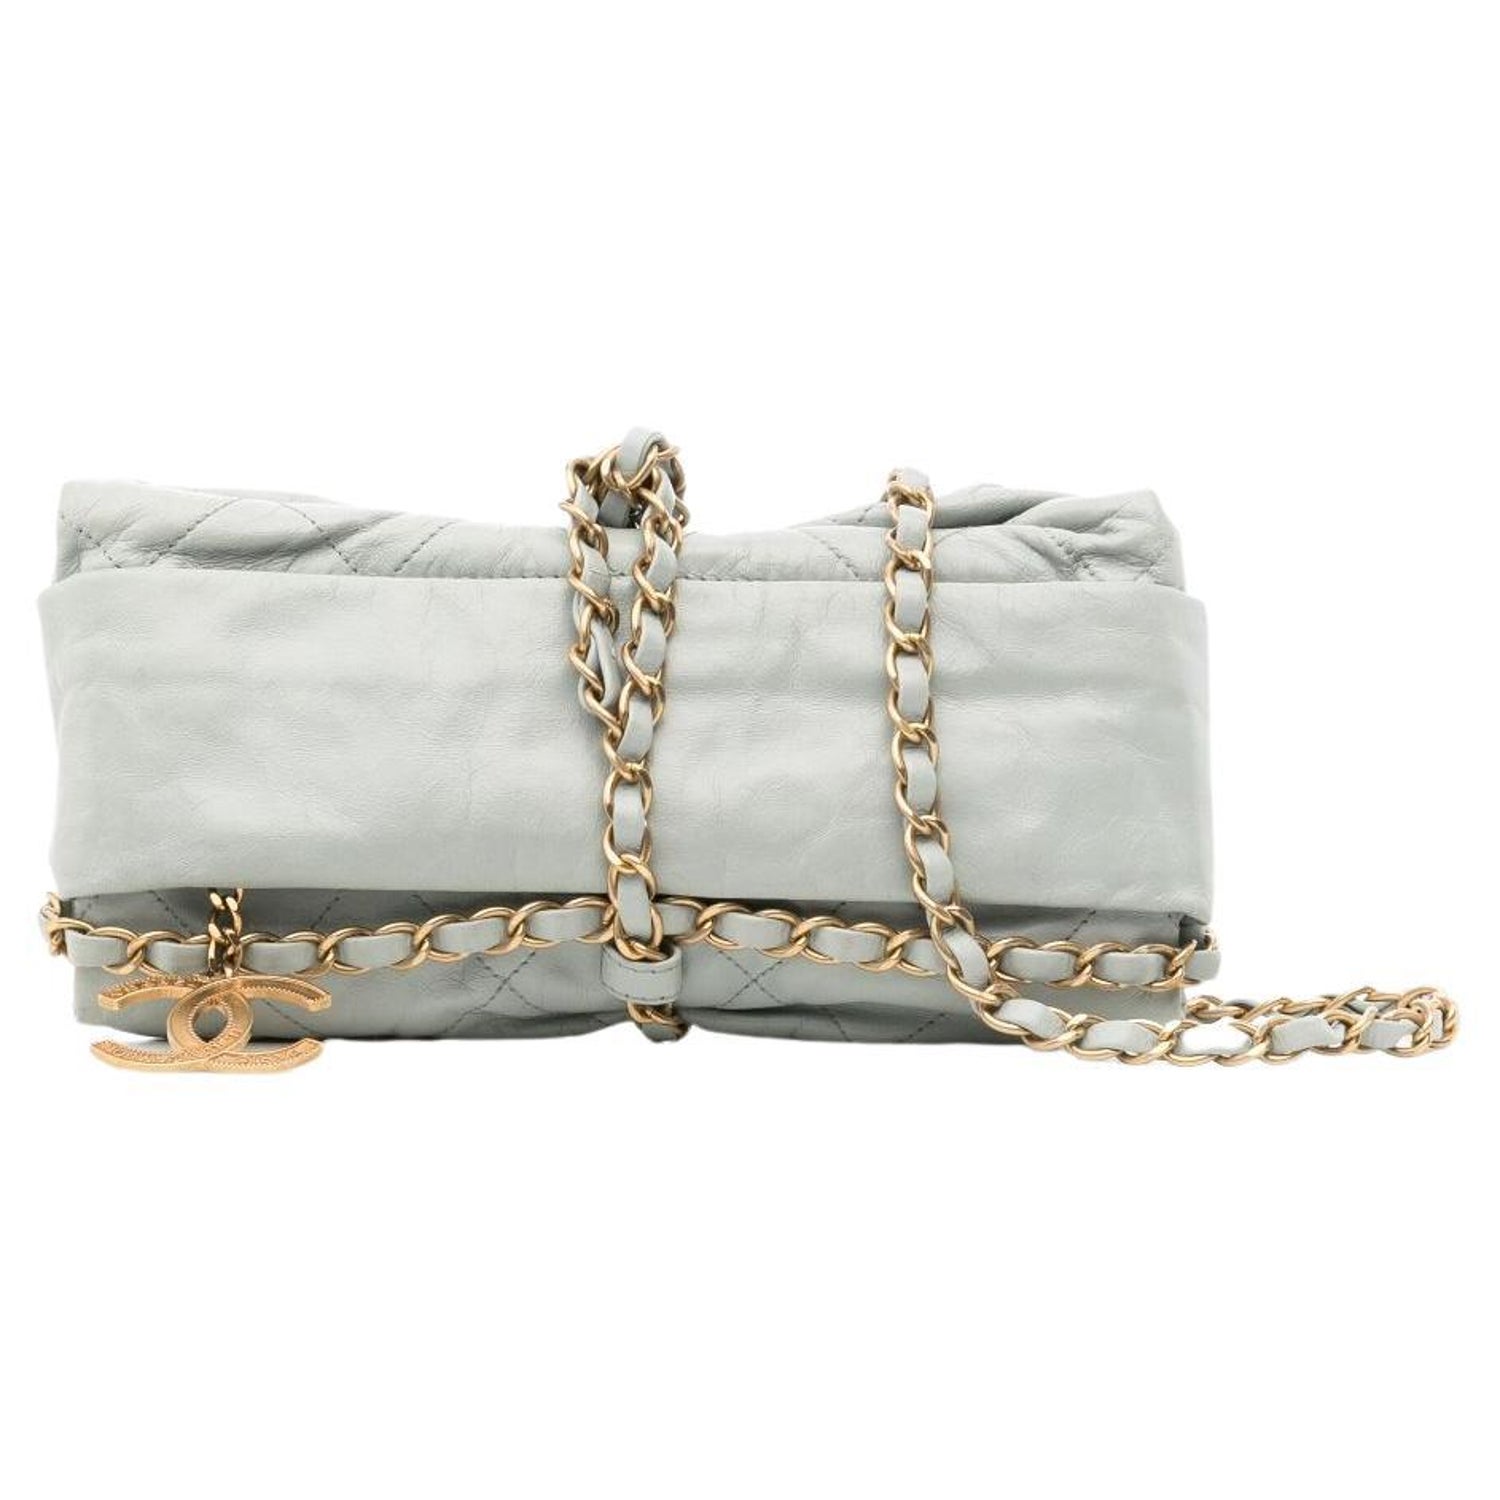 Chanel Paris Bombay Bag - 4 For Sale on 1stDibs